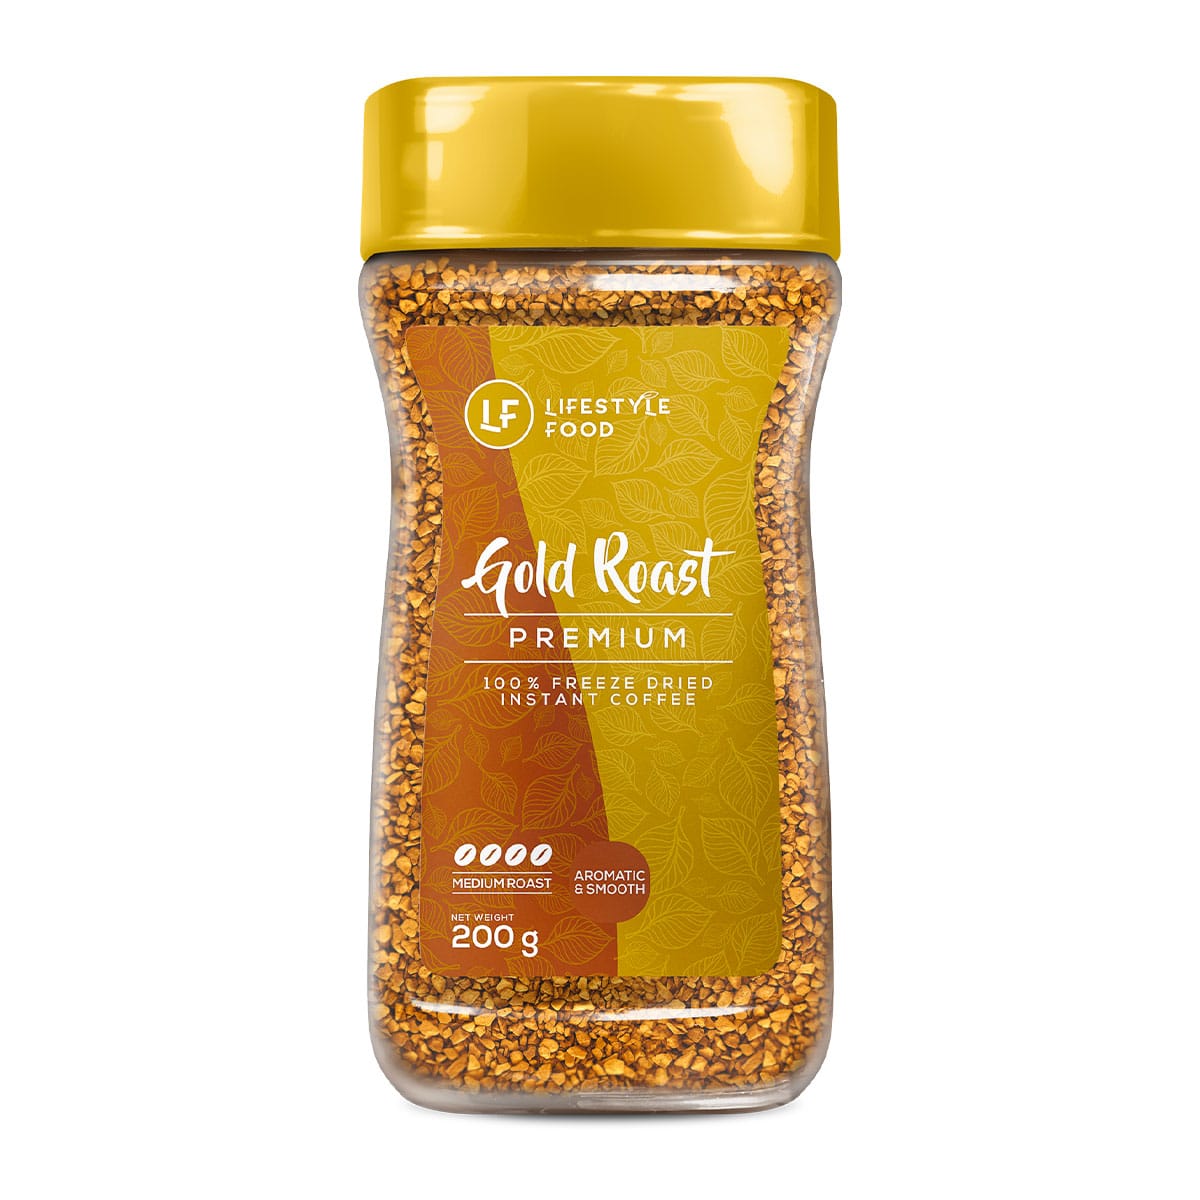 Lifestyle Food Gold Roast Premium Instant Coffee - 200g